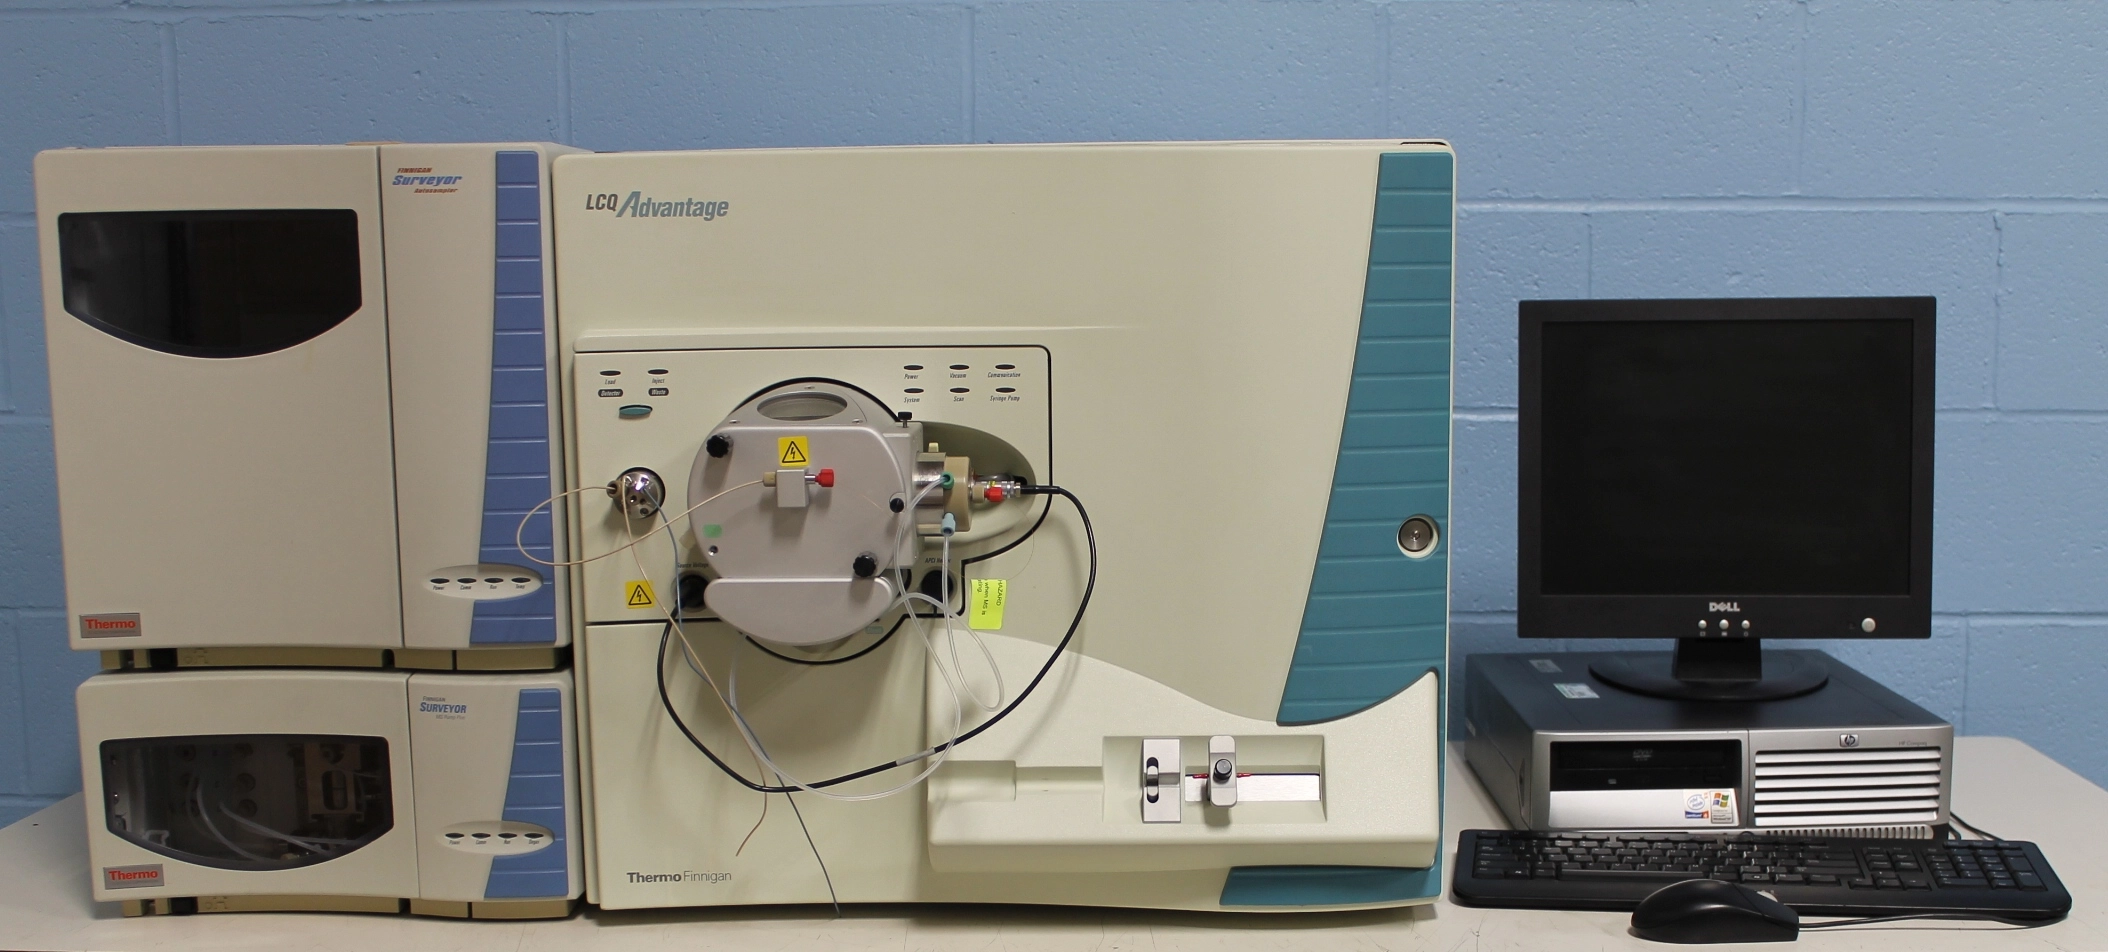 Thermo Finnigan LCQ Advantage Mass Spectrometer System